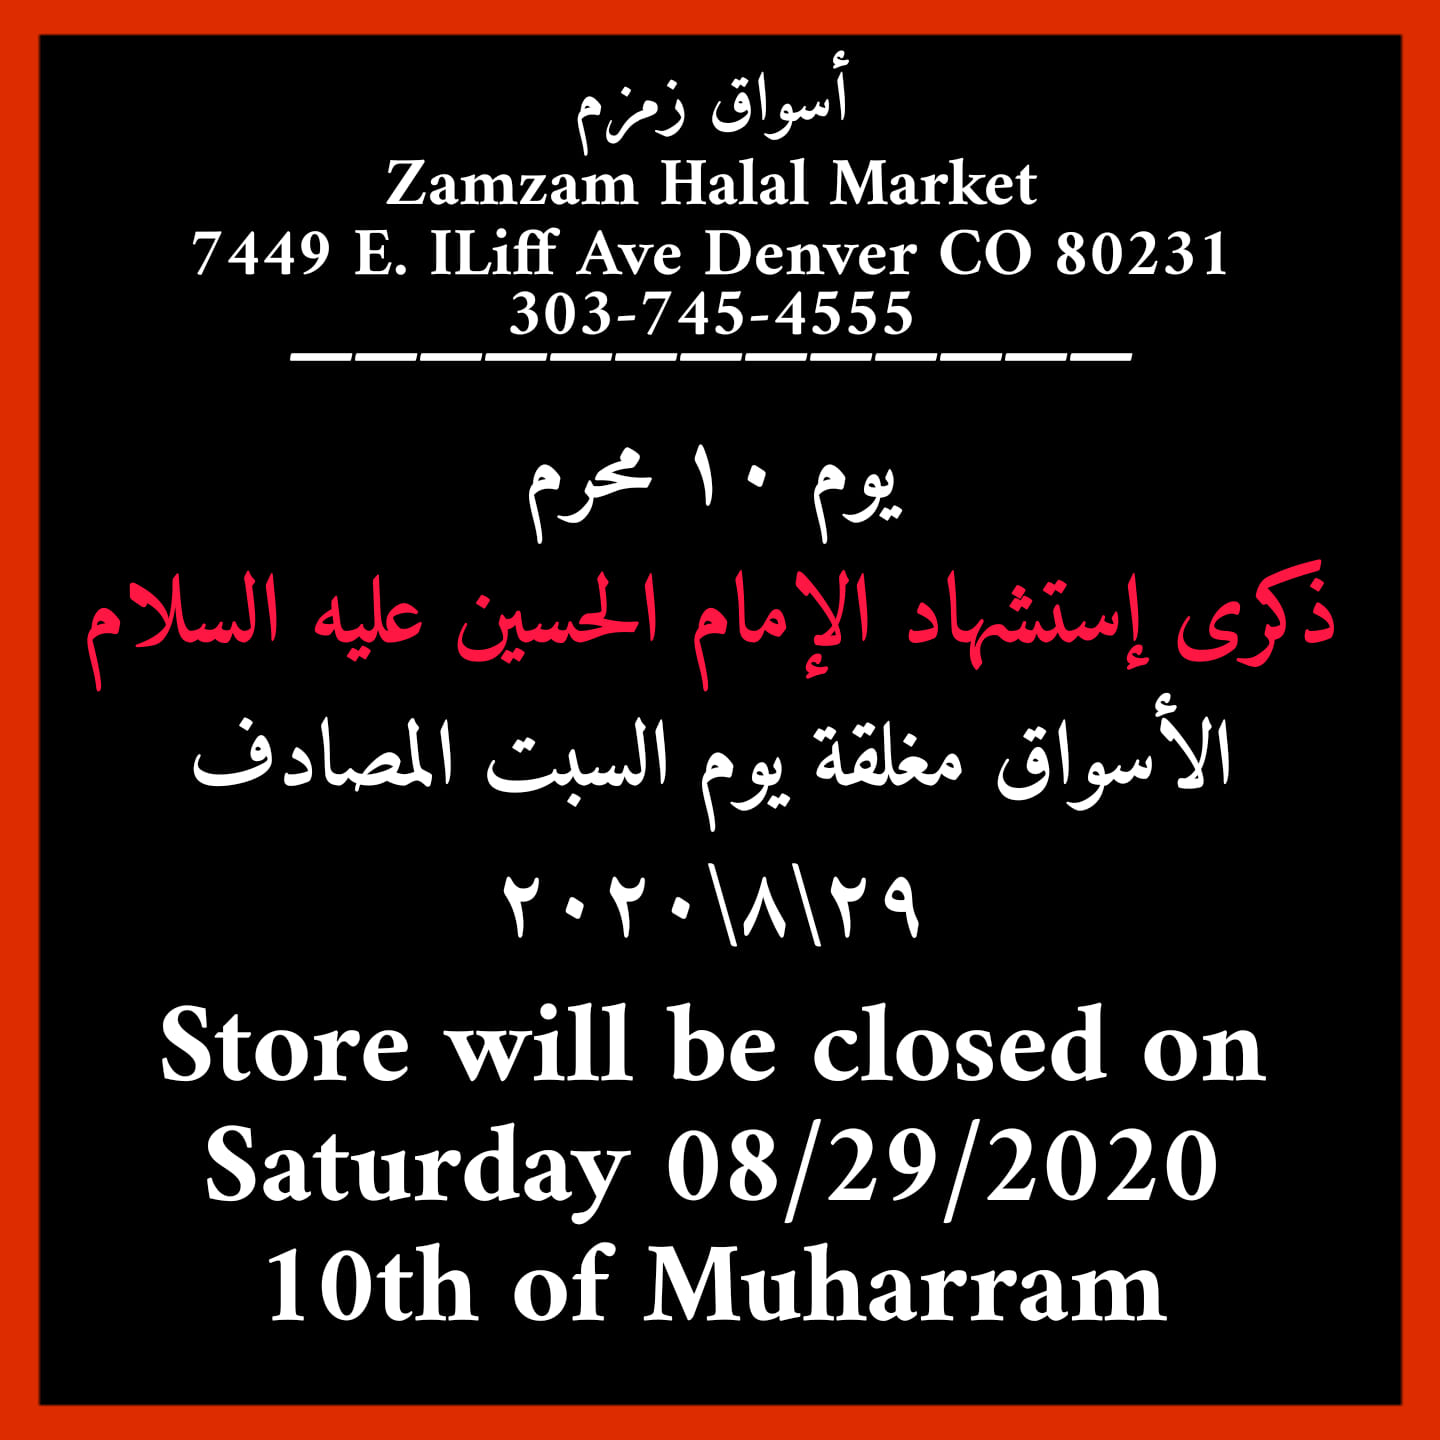 Zamzam Halal International Market & Deli